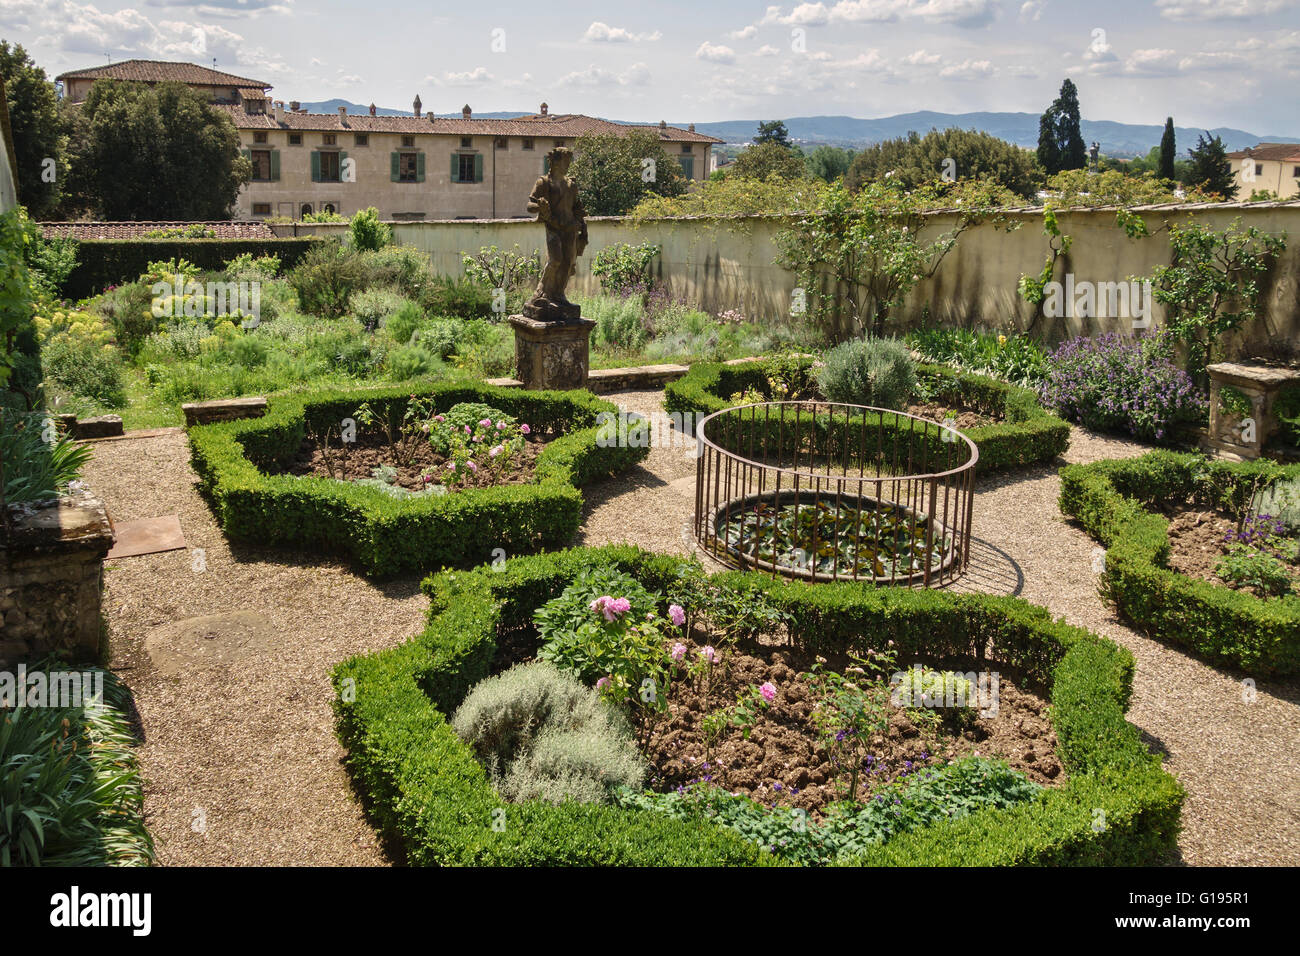 Villa di Castello (Villa Reale), near Florence, Italy. The ortaccio (herb garden) for medicinal and exotic plants Stock Photo